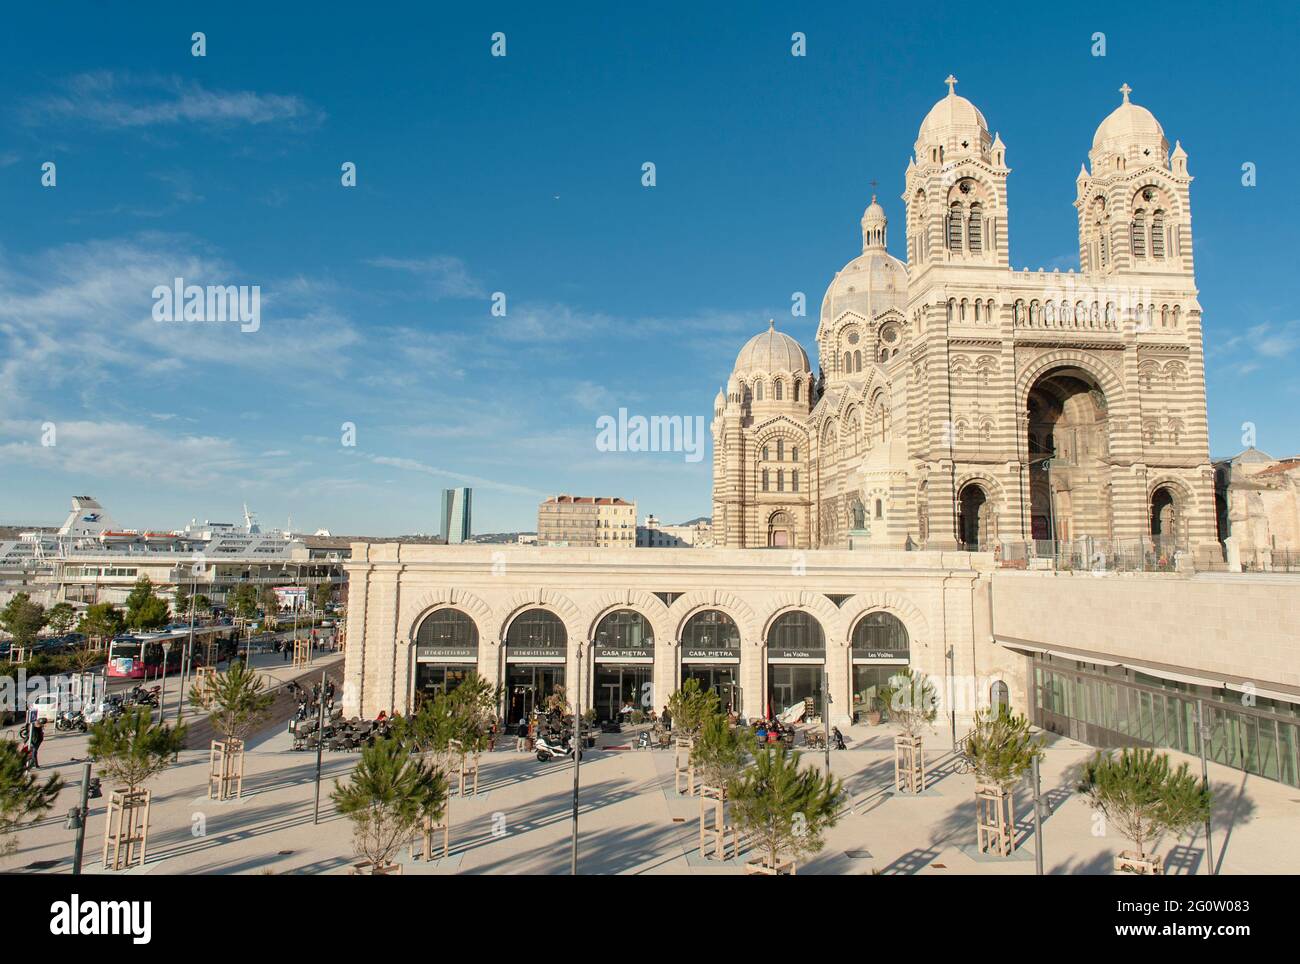 Cathédrale La Major (Cathedral of Saint Mary Major), La Joliette, Marseille, France Stock Photo